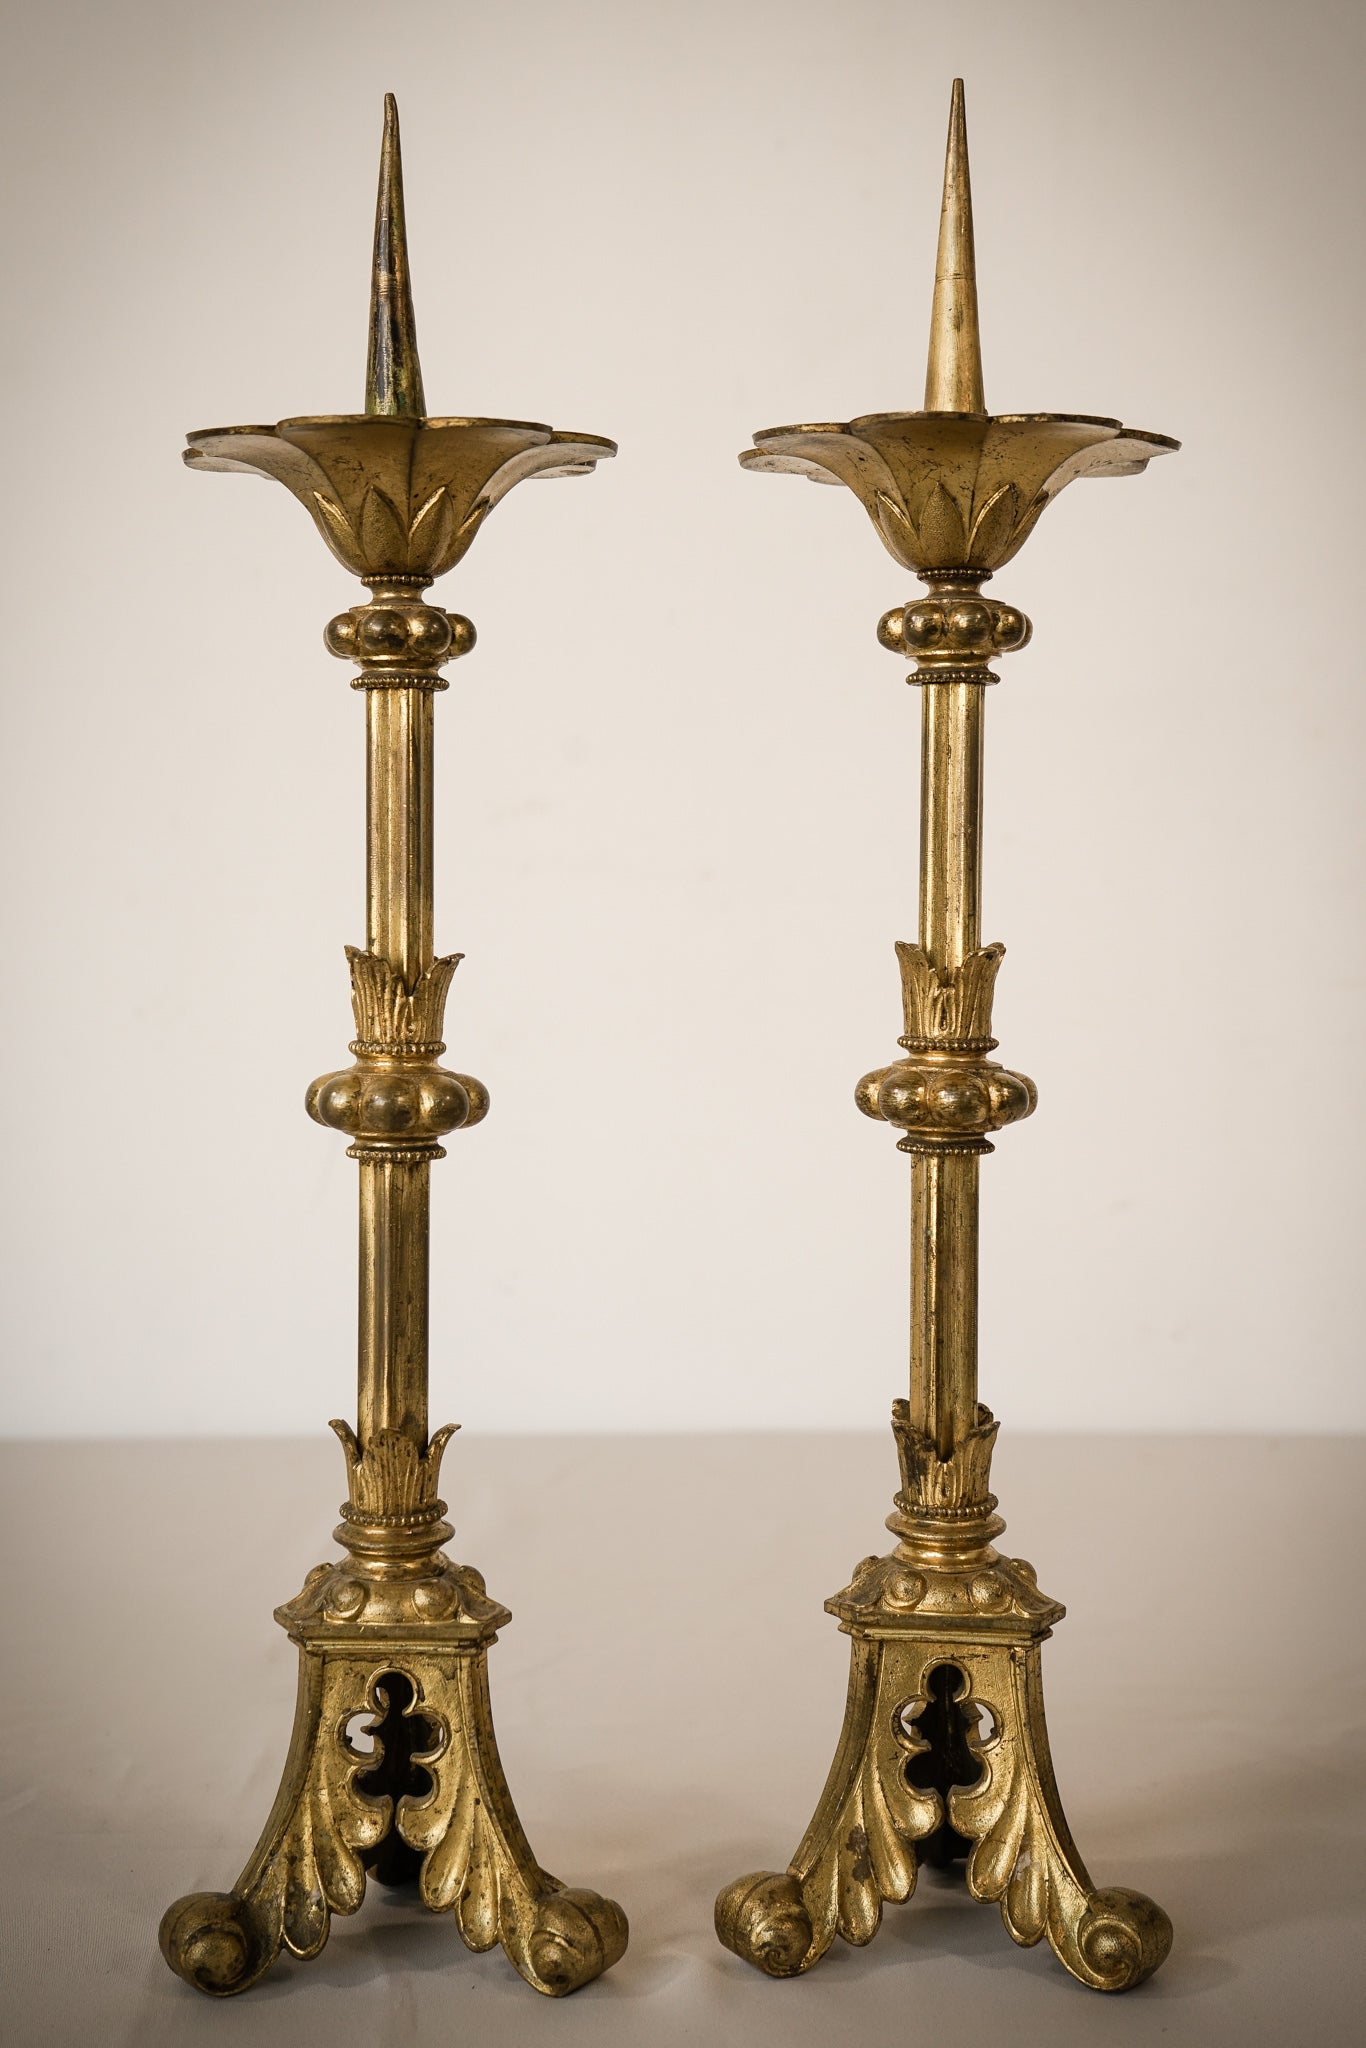 Gothic Revival - Gilded Candlesticks – Modern Decorative